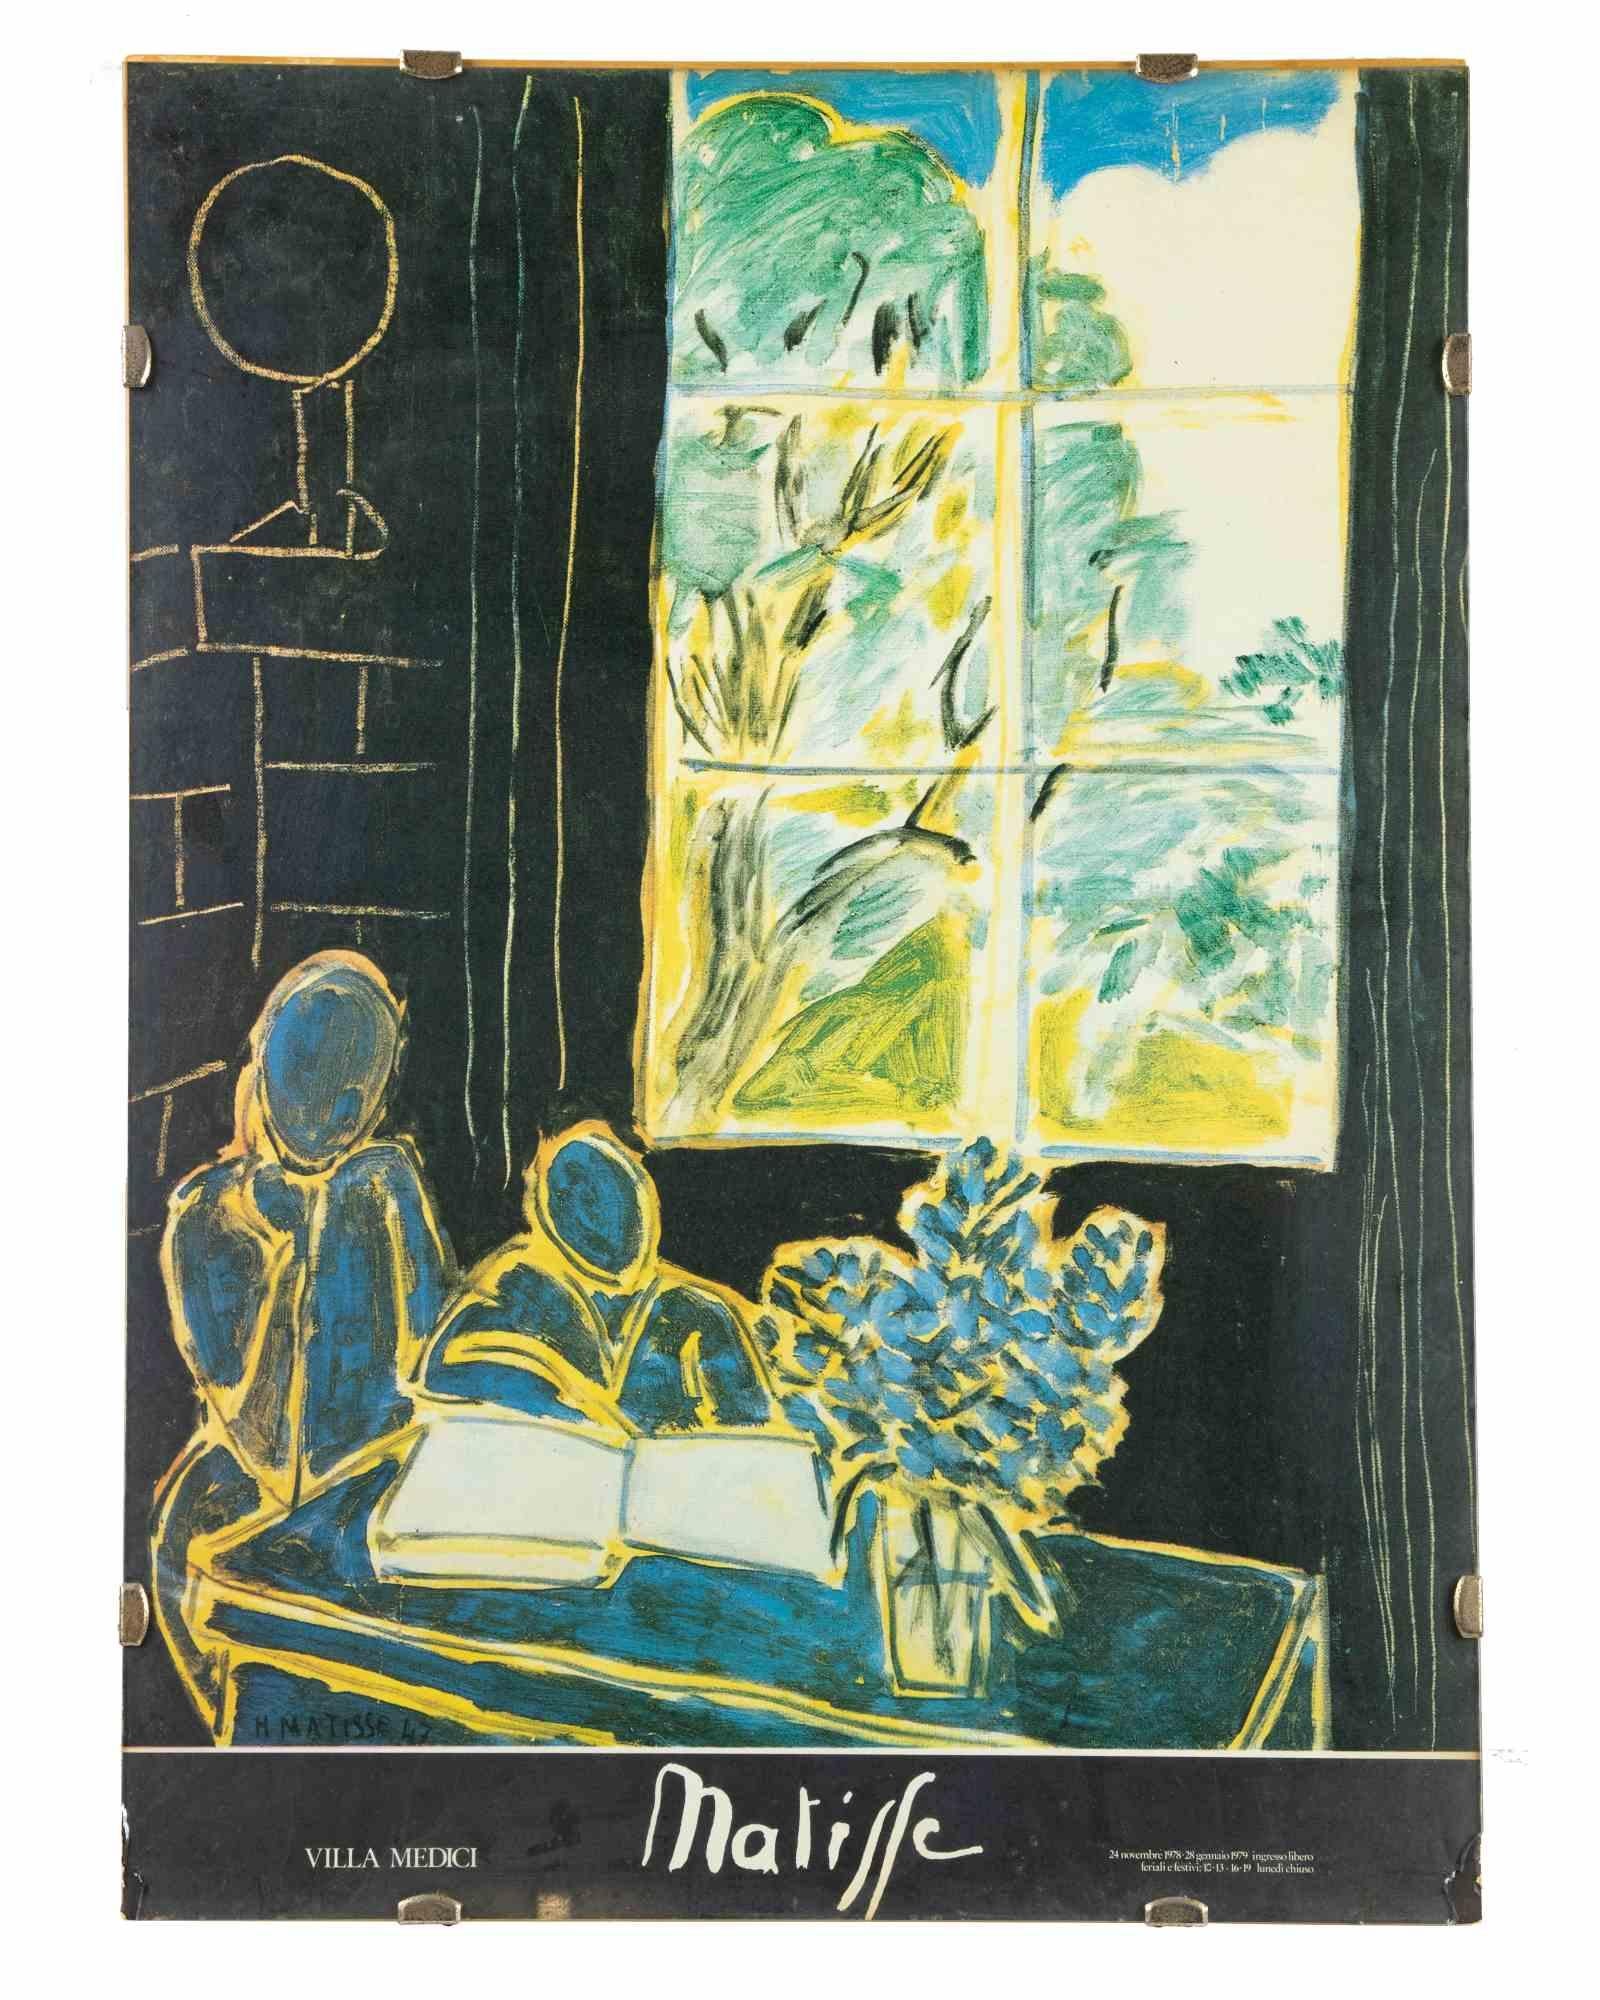 Vintage Matisse Exhibition Poster - Villa Medici - 1978 - Print by Henri Matisse